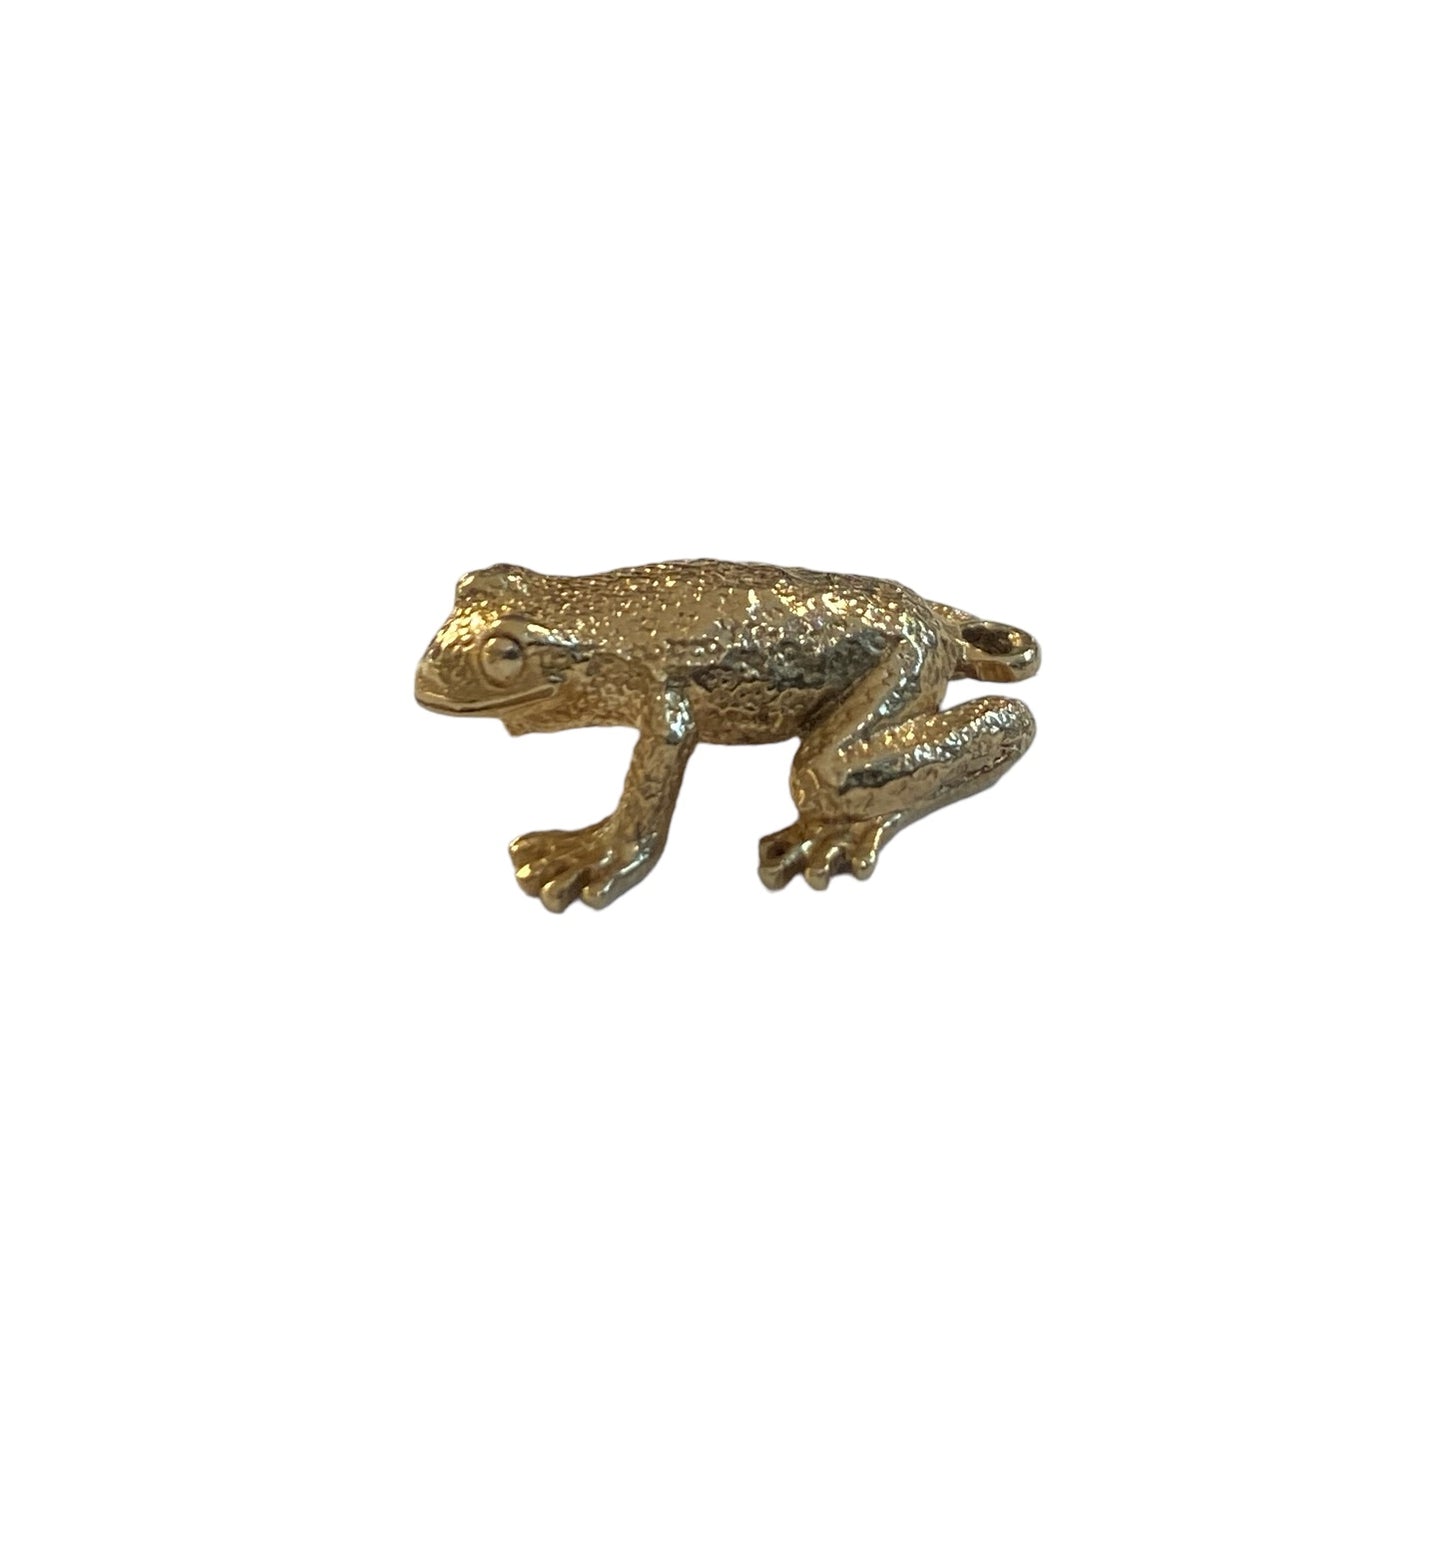 9ct vintage gold frog charm circa 1968 maker PPld